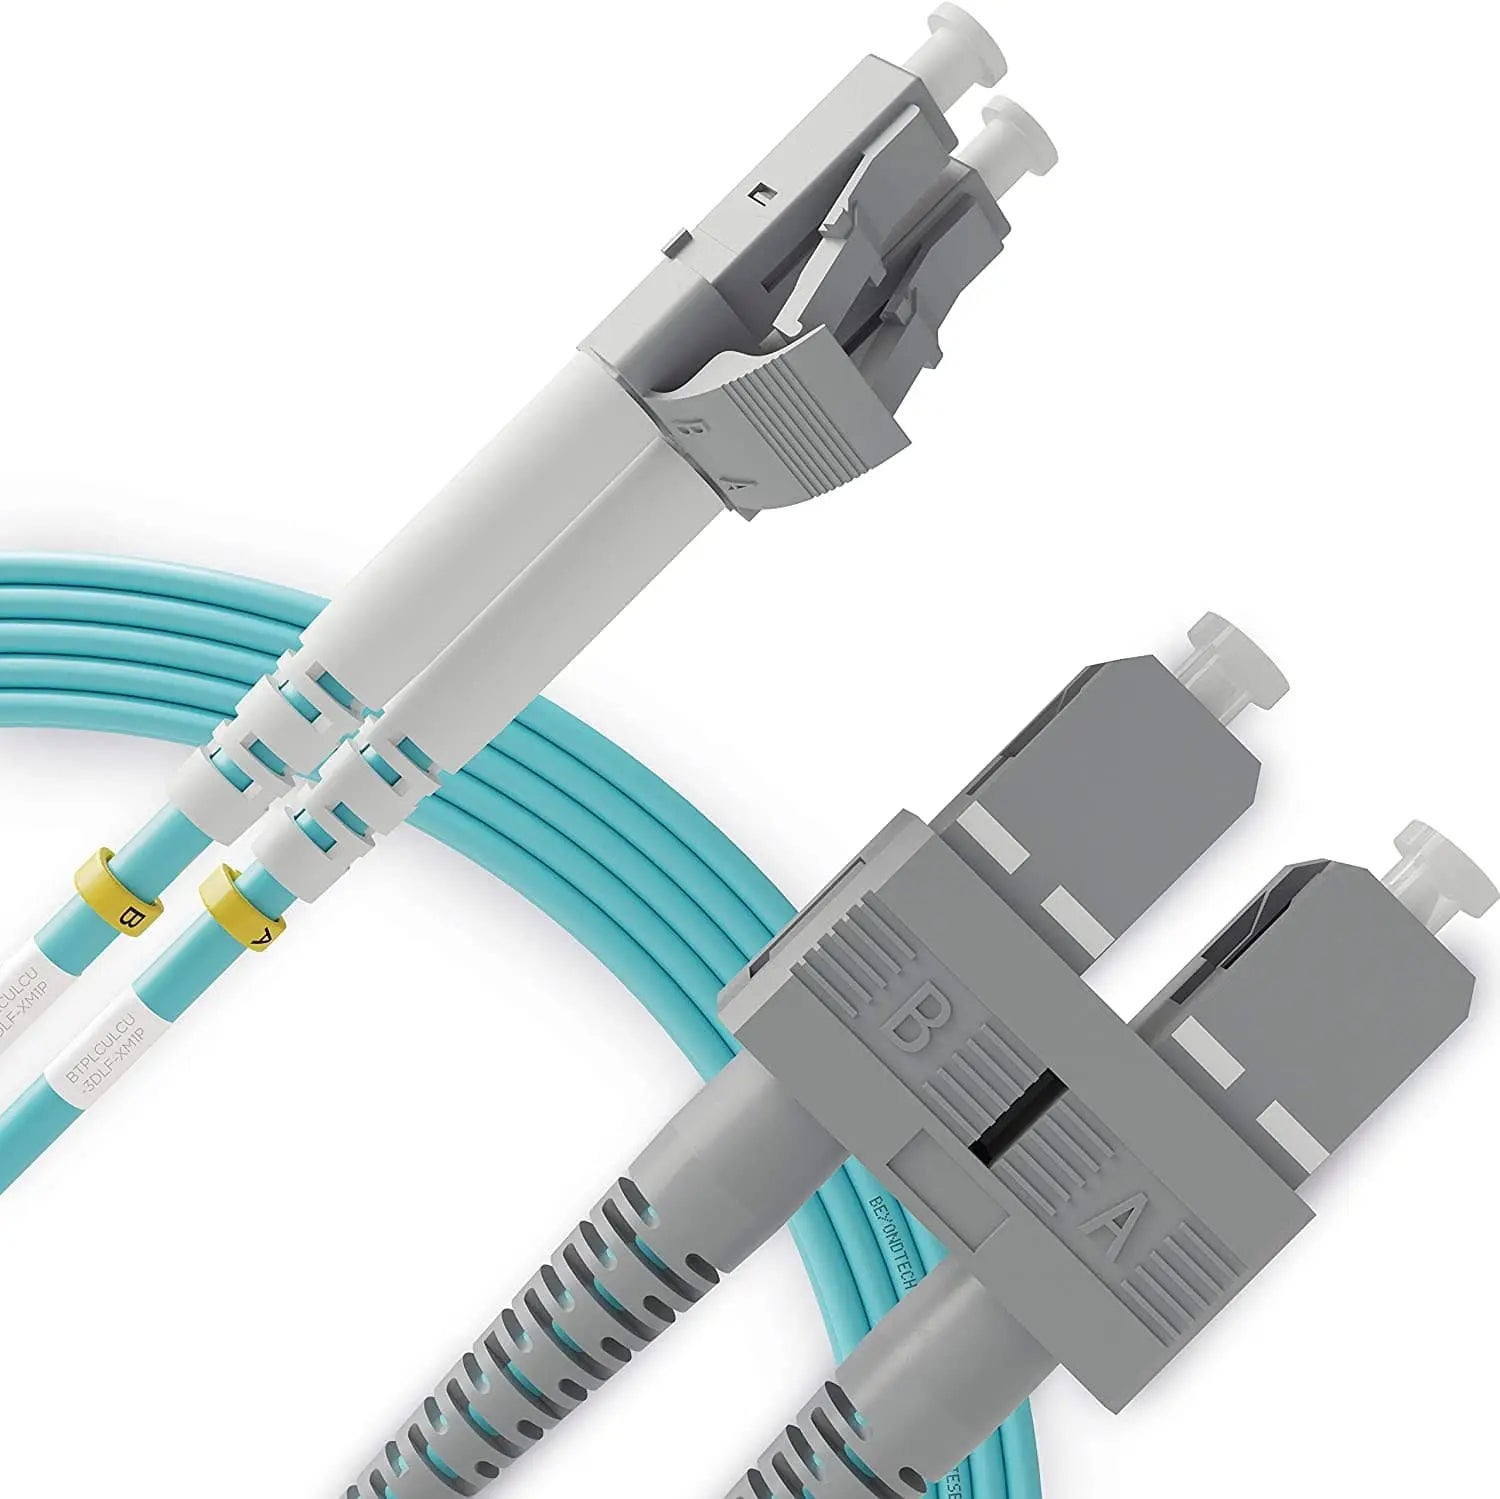 Cable fibre optique multimode SC/UPC-SC/UPC MMOM2 50/125 Duplex 3m